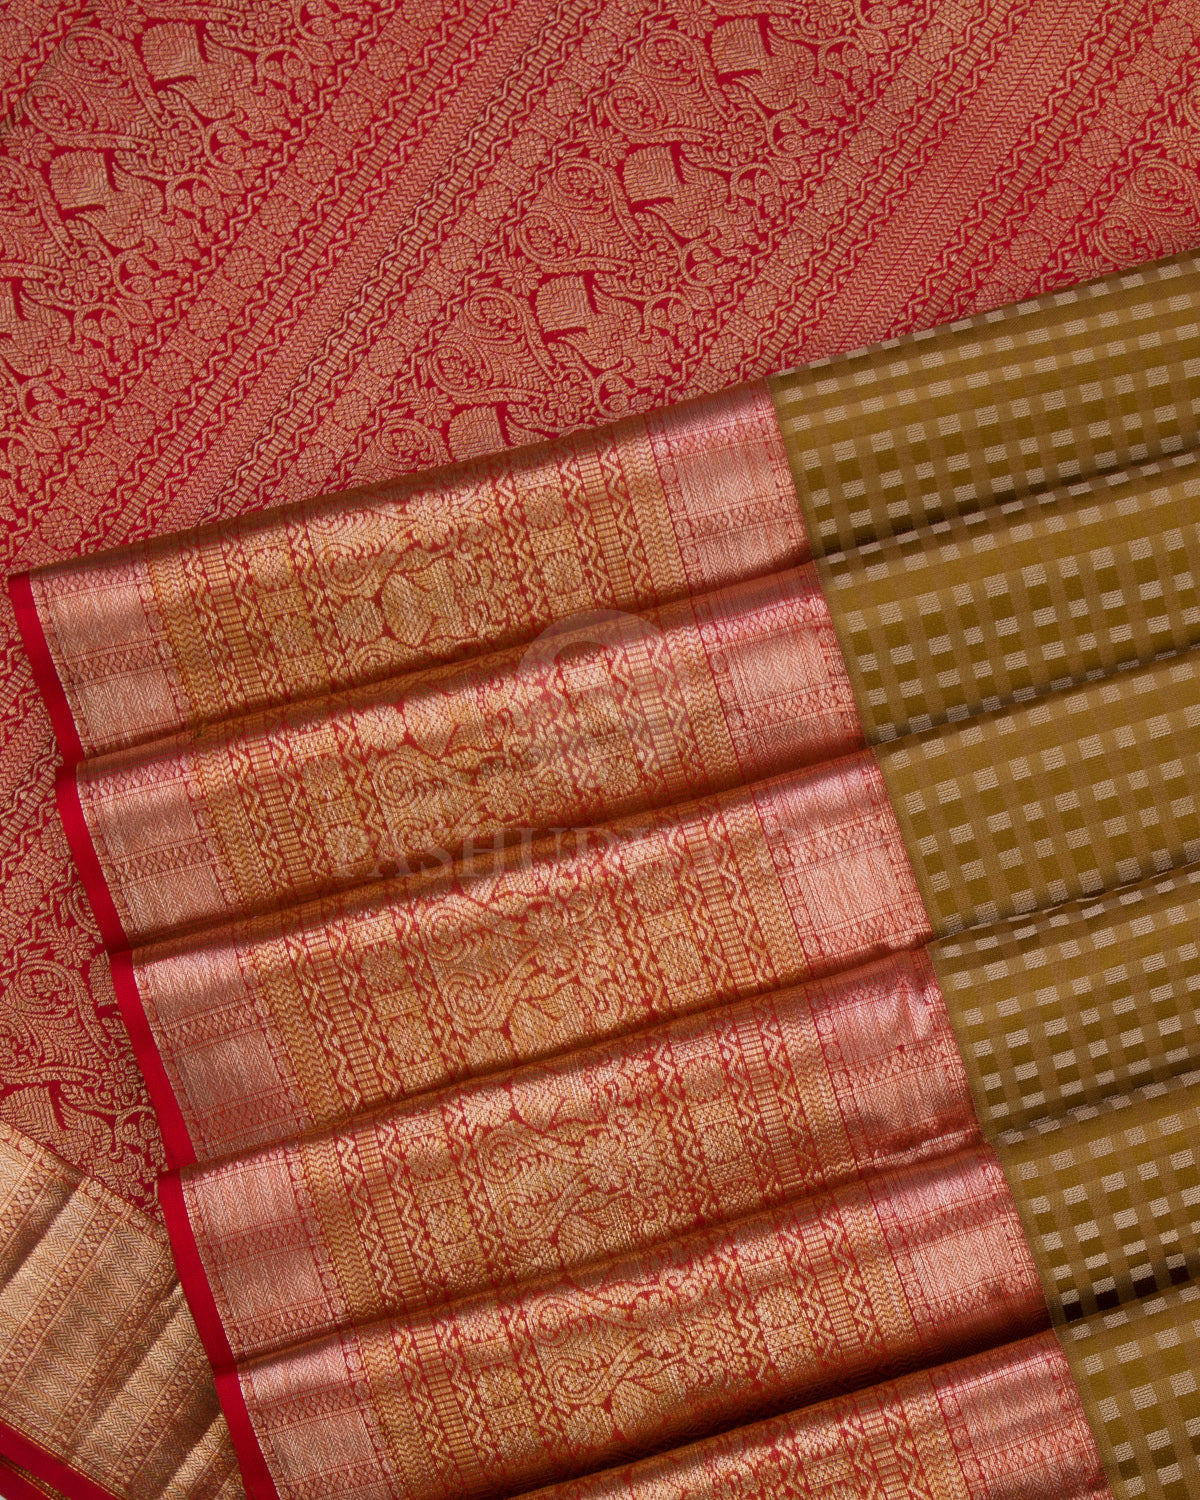 Antique Gold and Red Kanjivaram Silk Saree - DT181- DT181 View 4